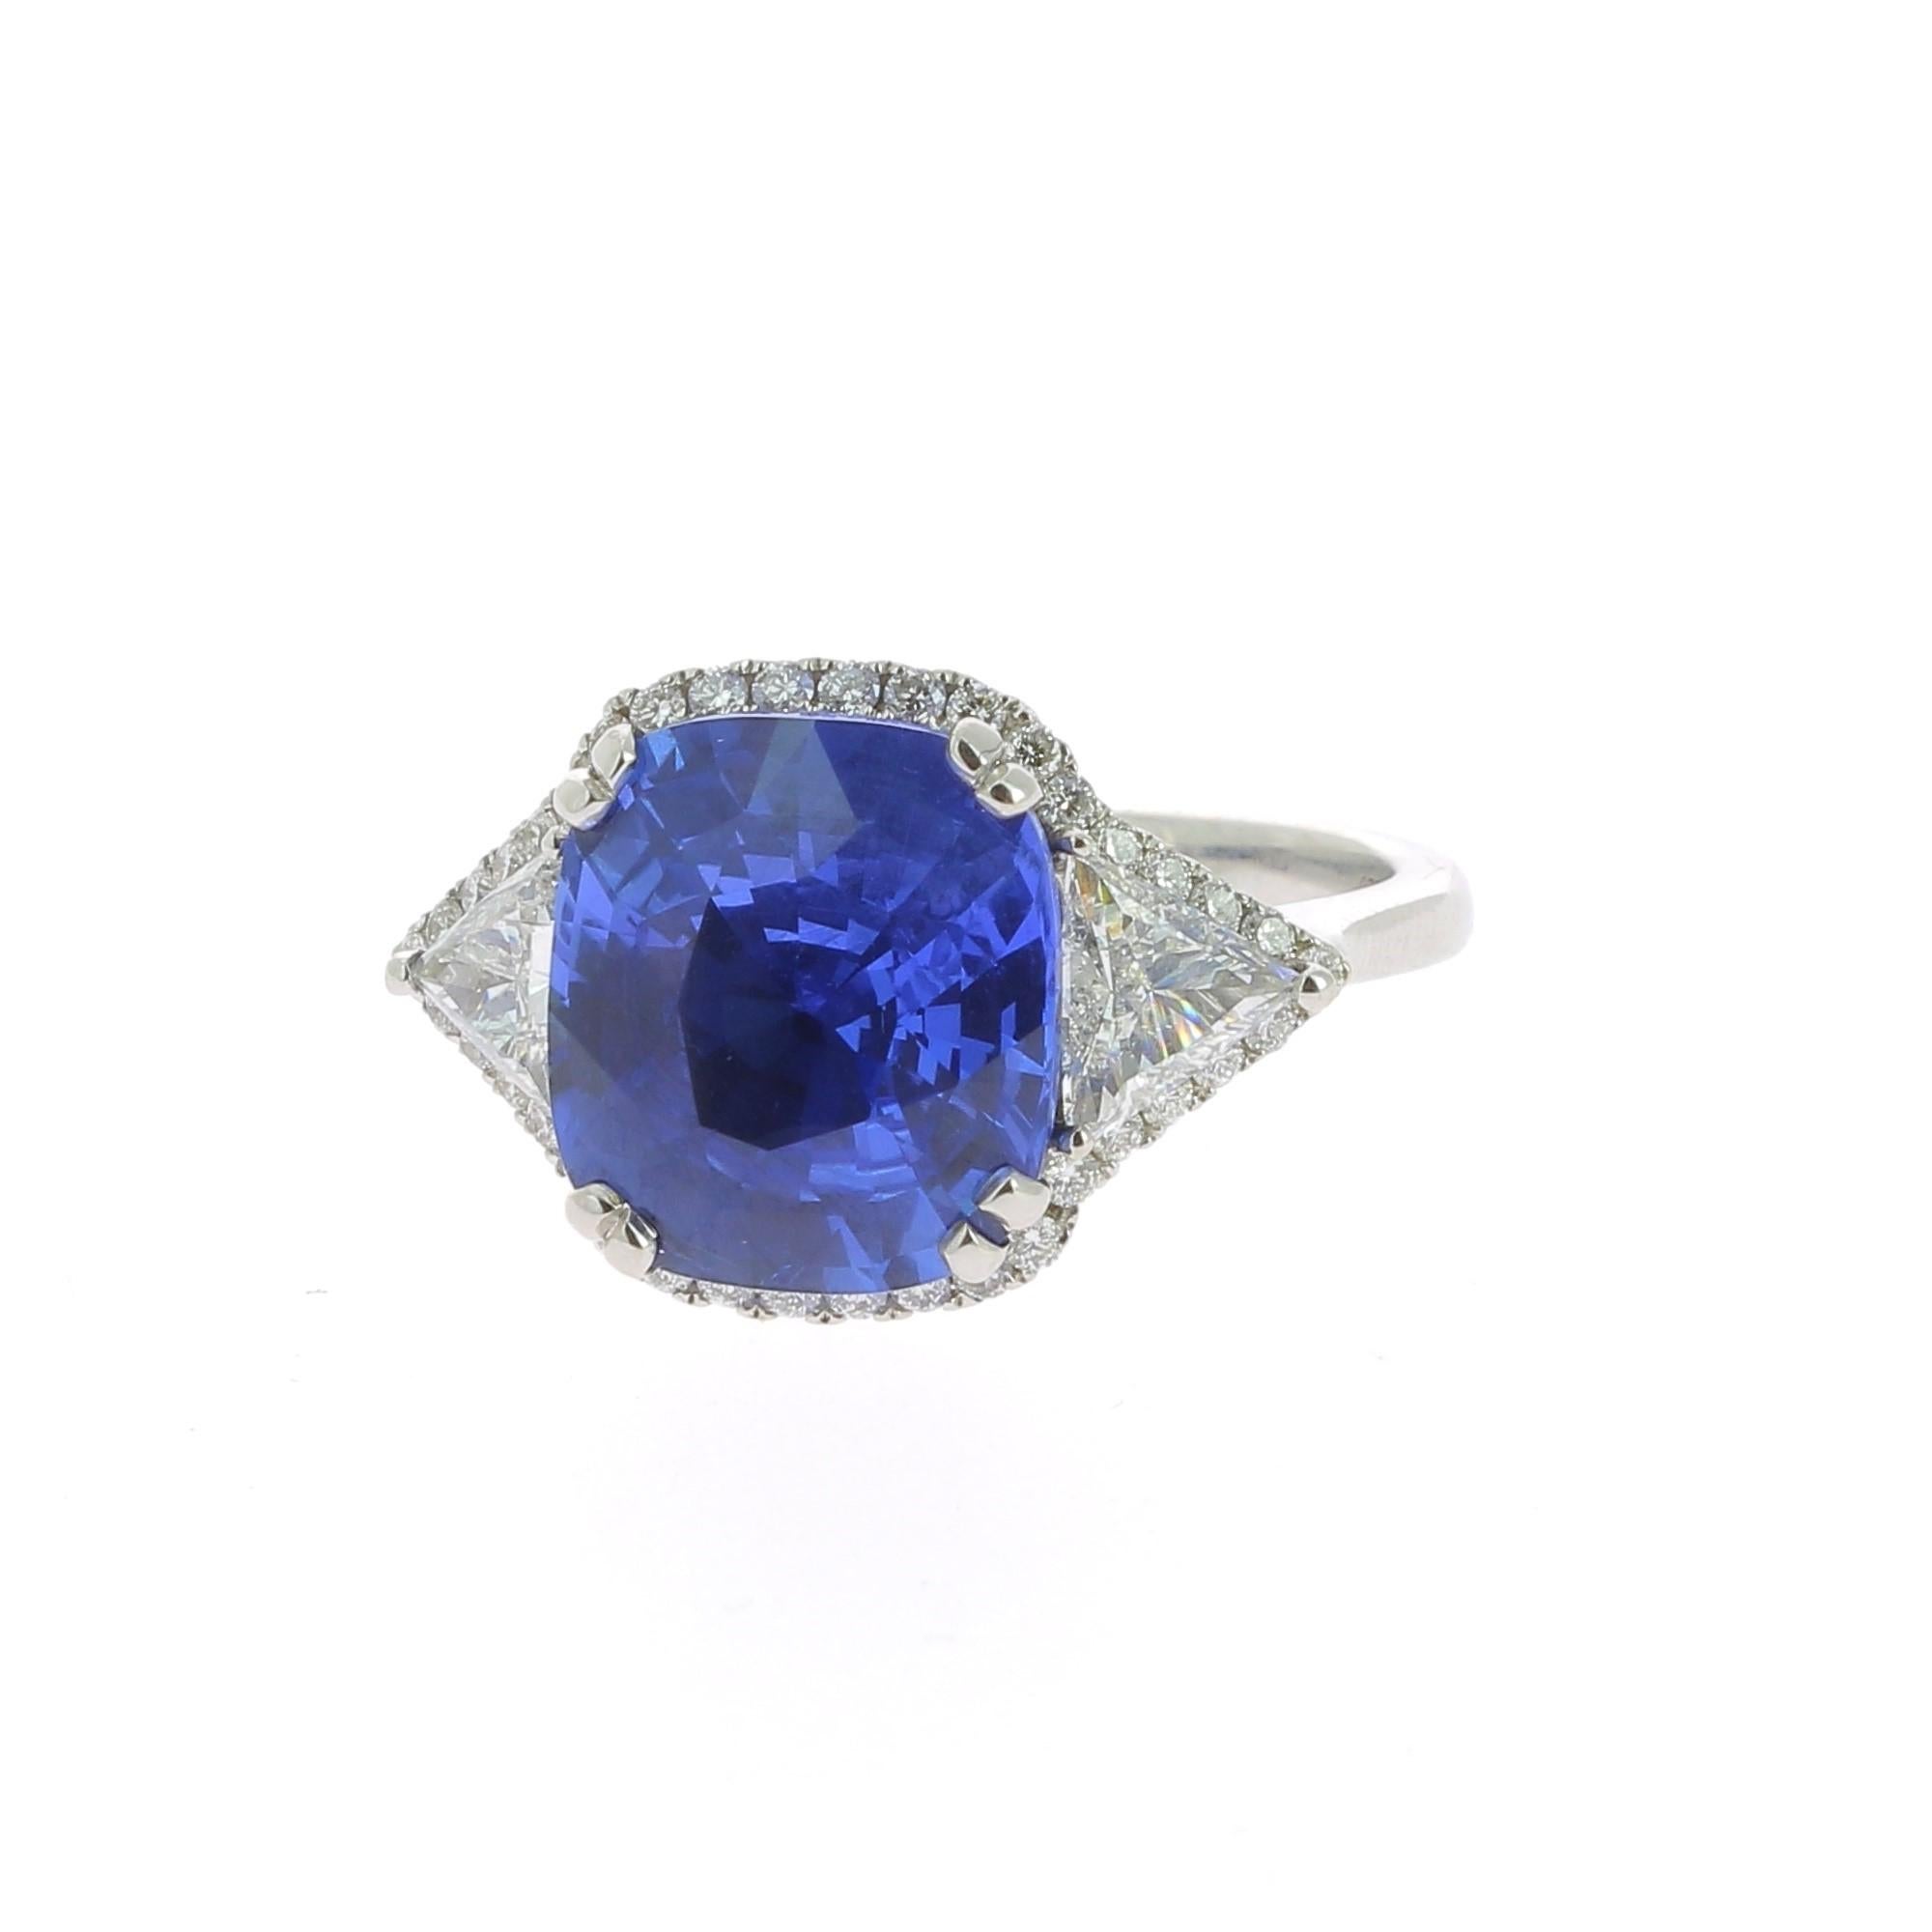 Contemporary 7.16 Carat Ceylon Intense Blue Sapphire Cocktail Ring Set with Round Diamond